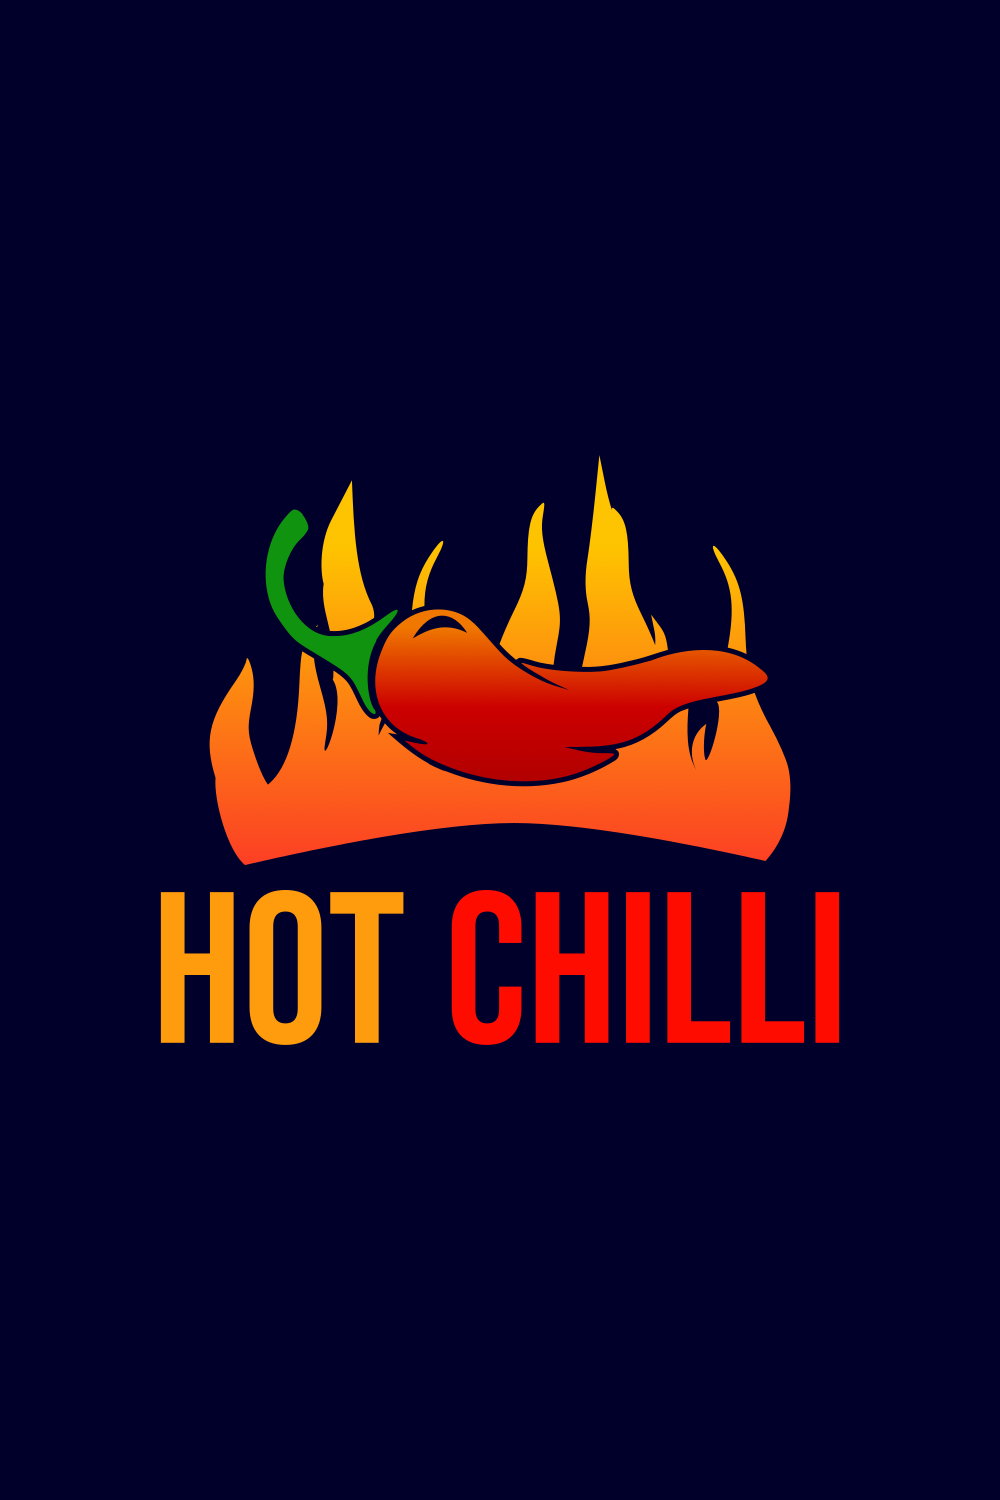 Hot Chili Sign Logo For Restaurant And Cafe pinterest image.